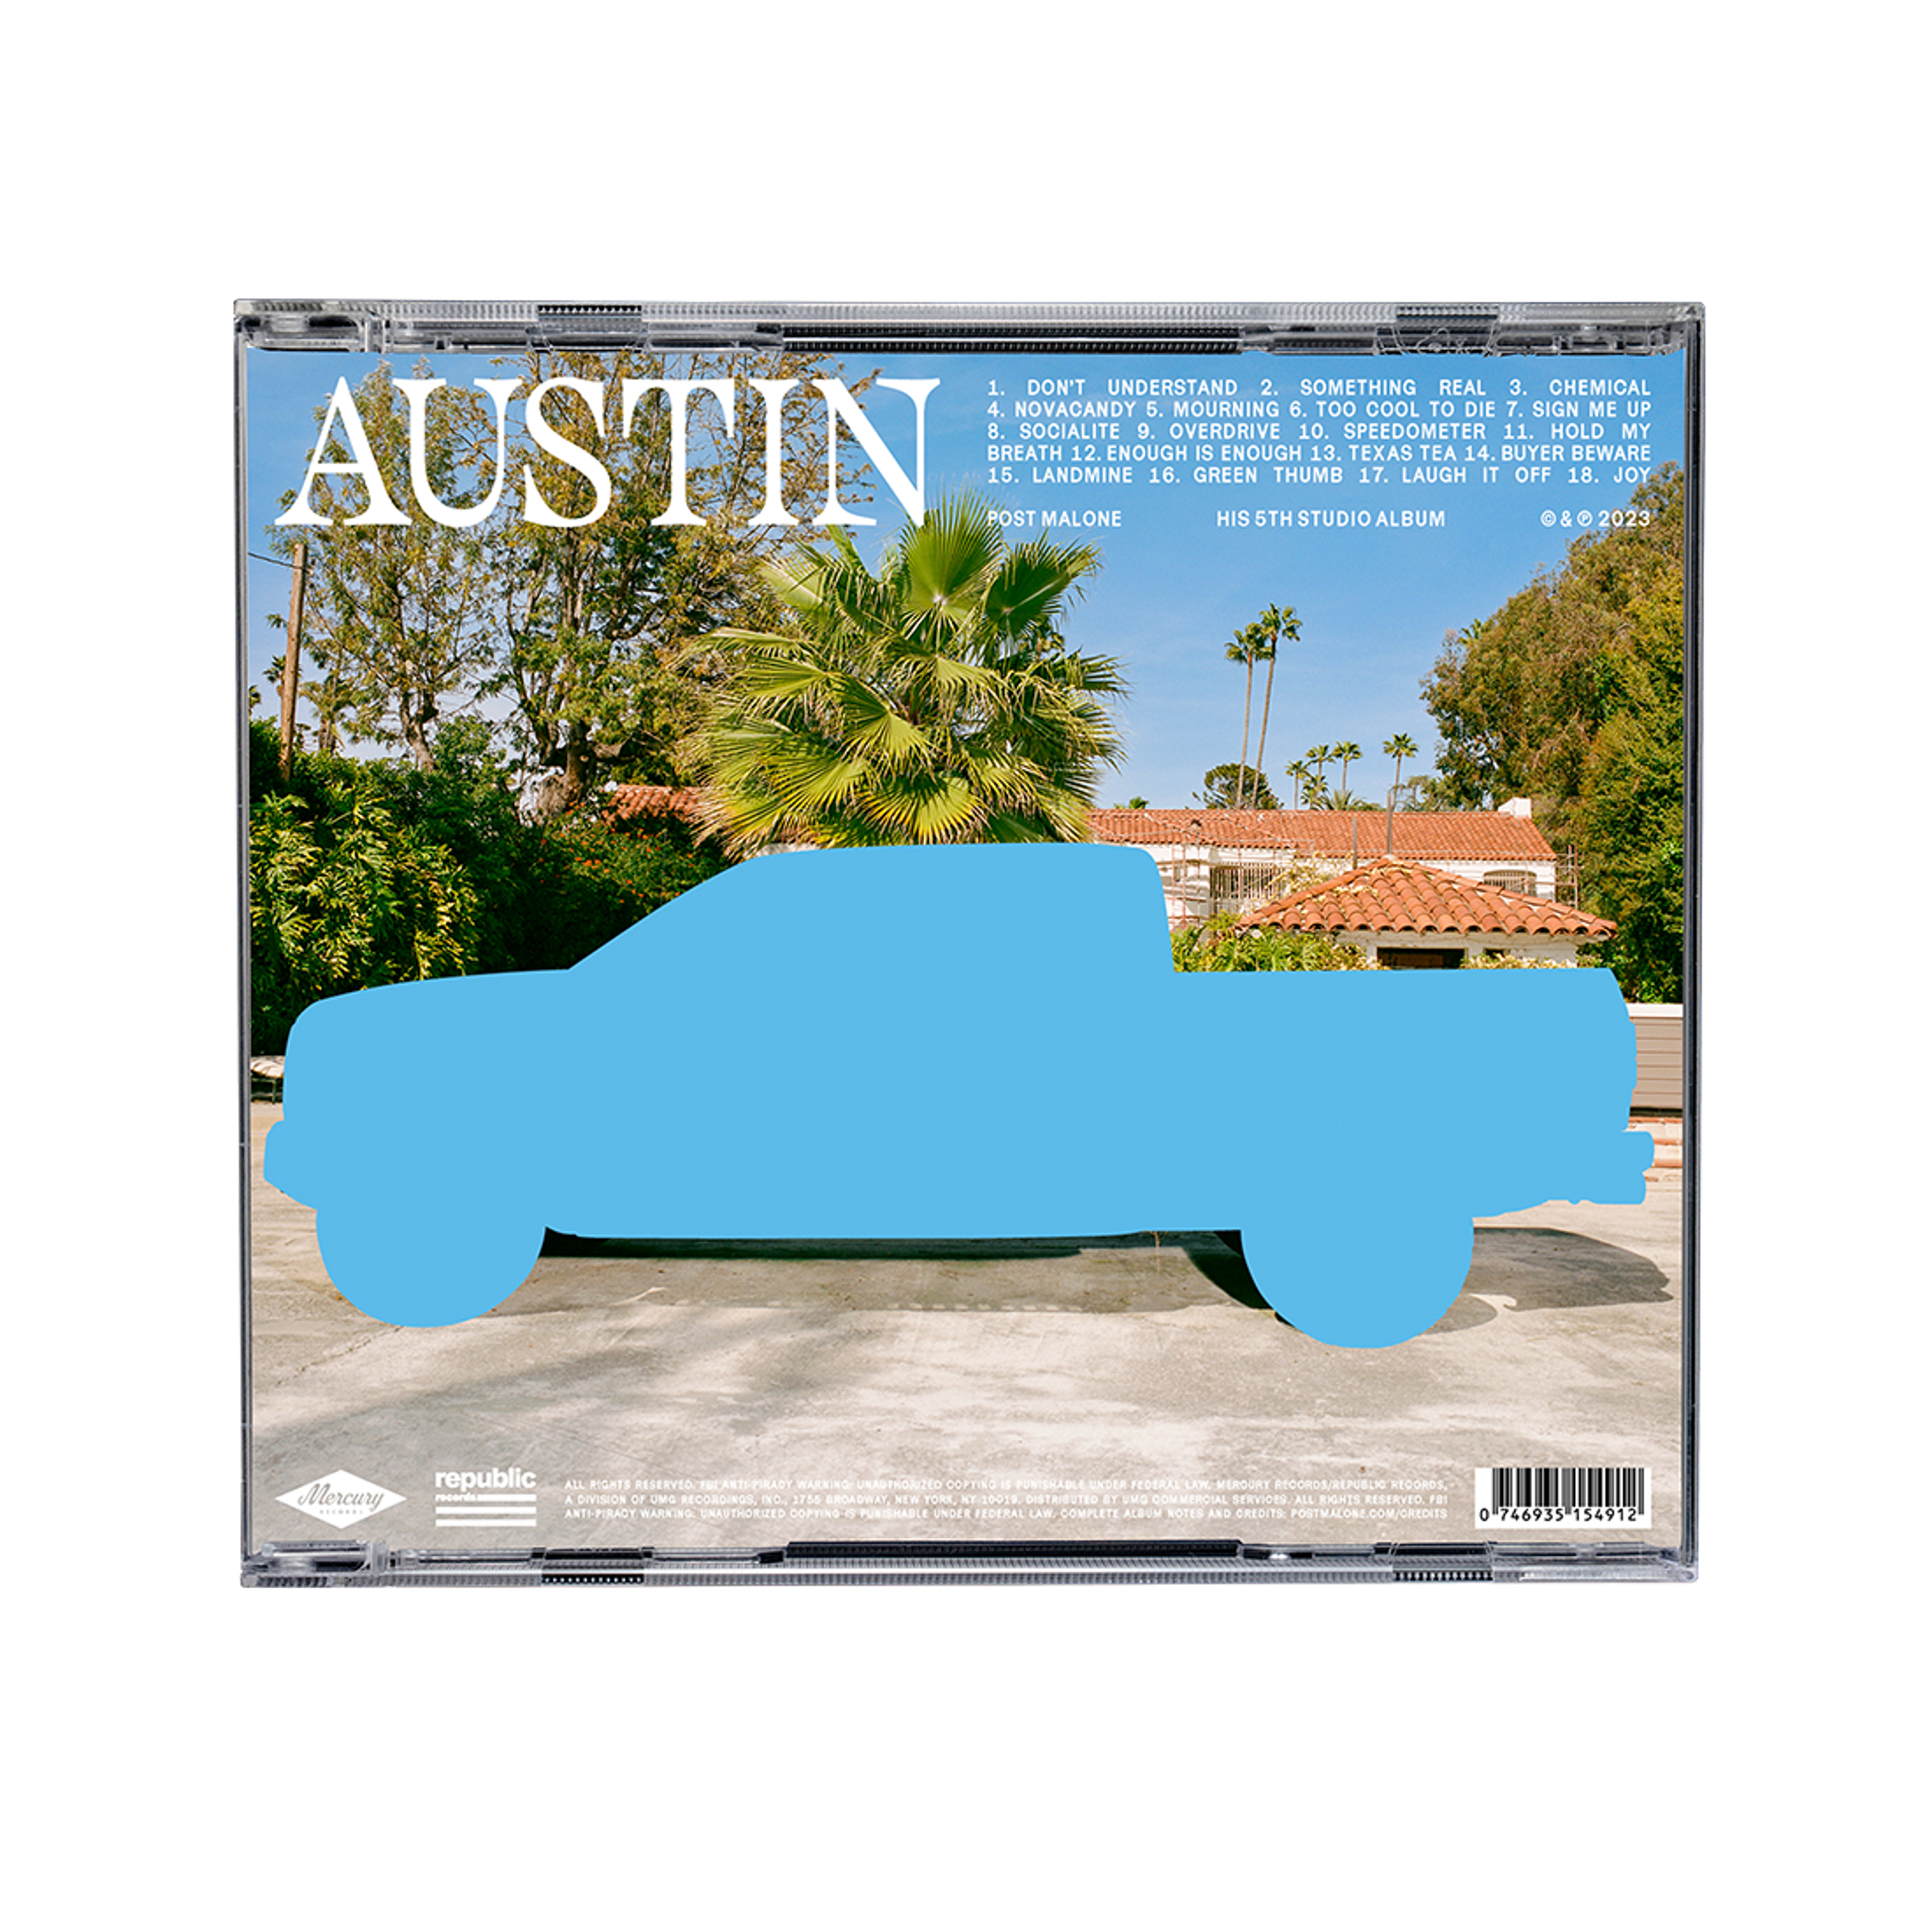 Alternate View 1 of Austin (Alt. Tour Version 1)